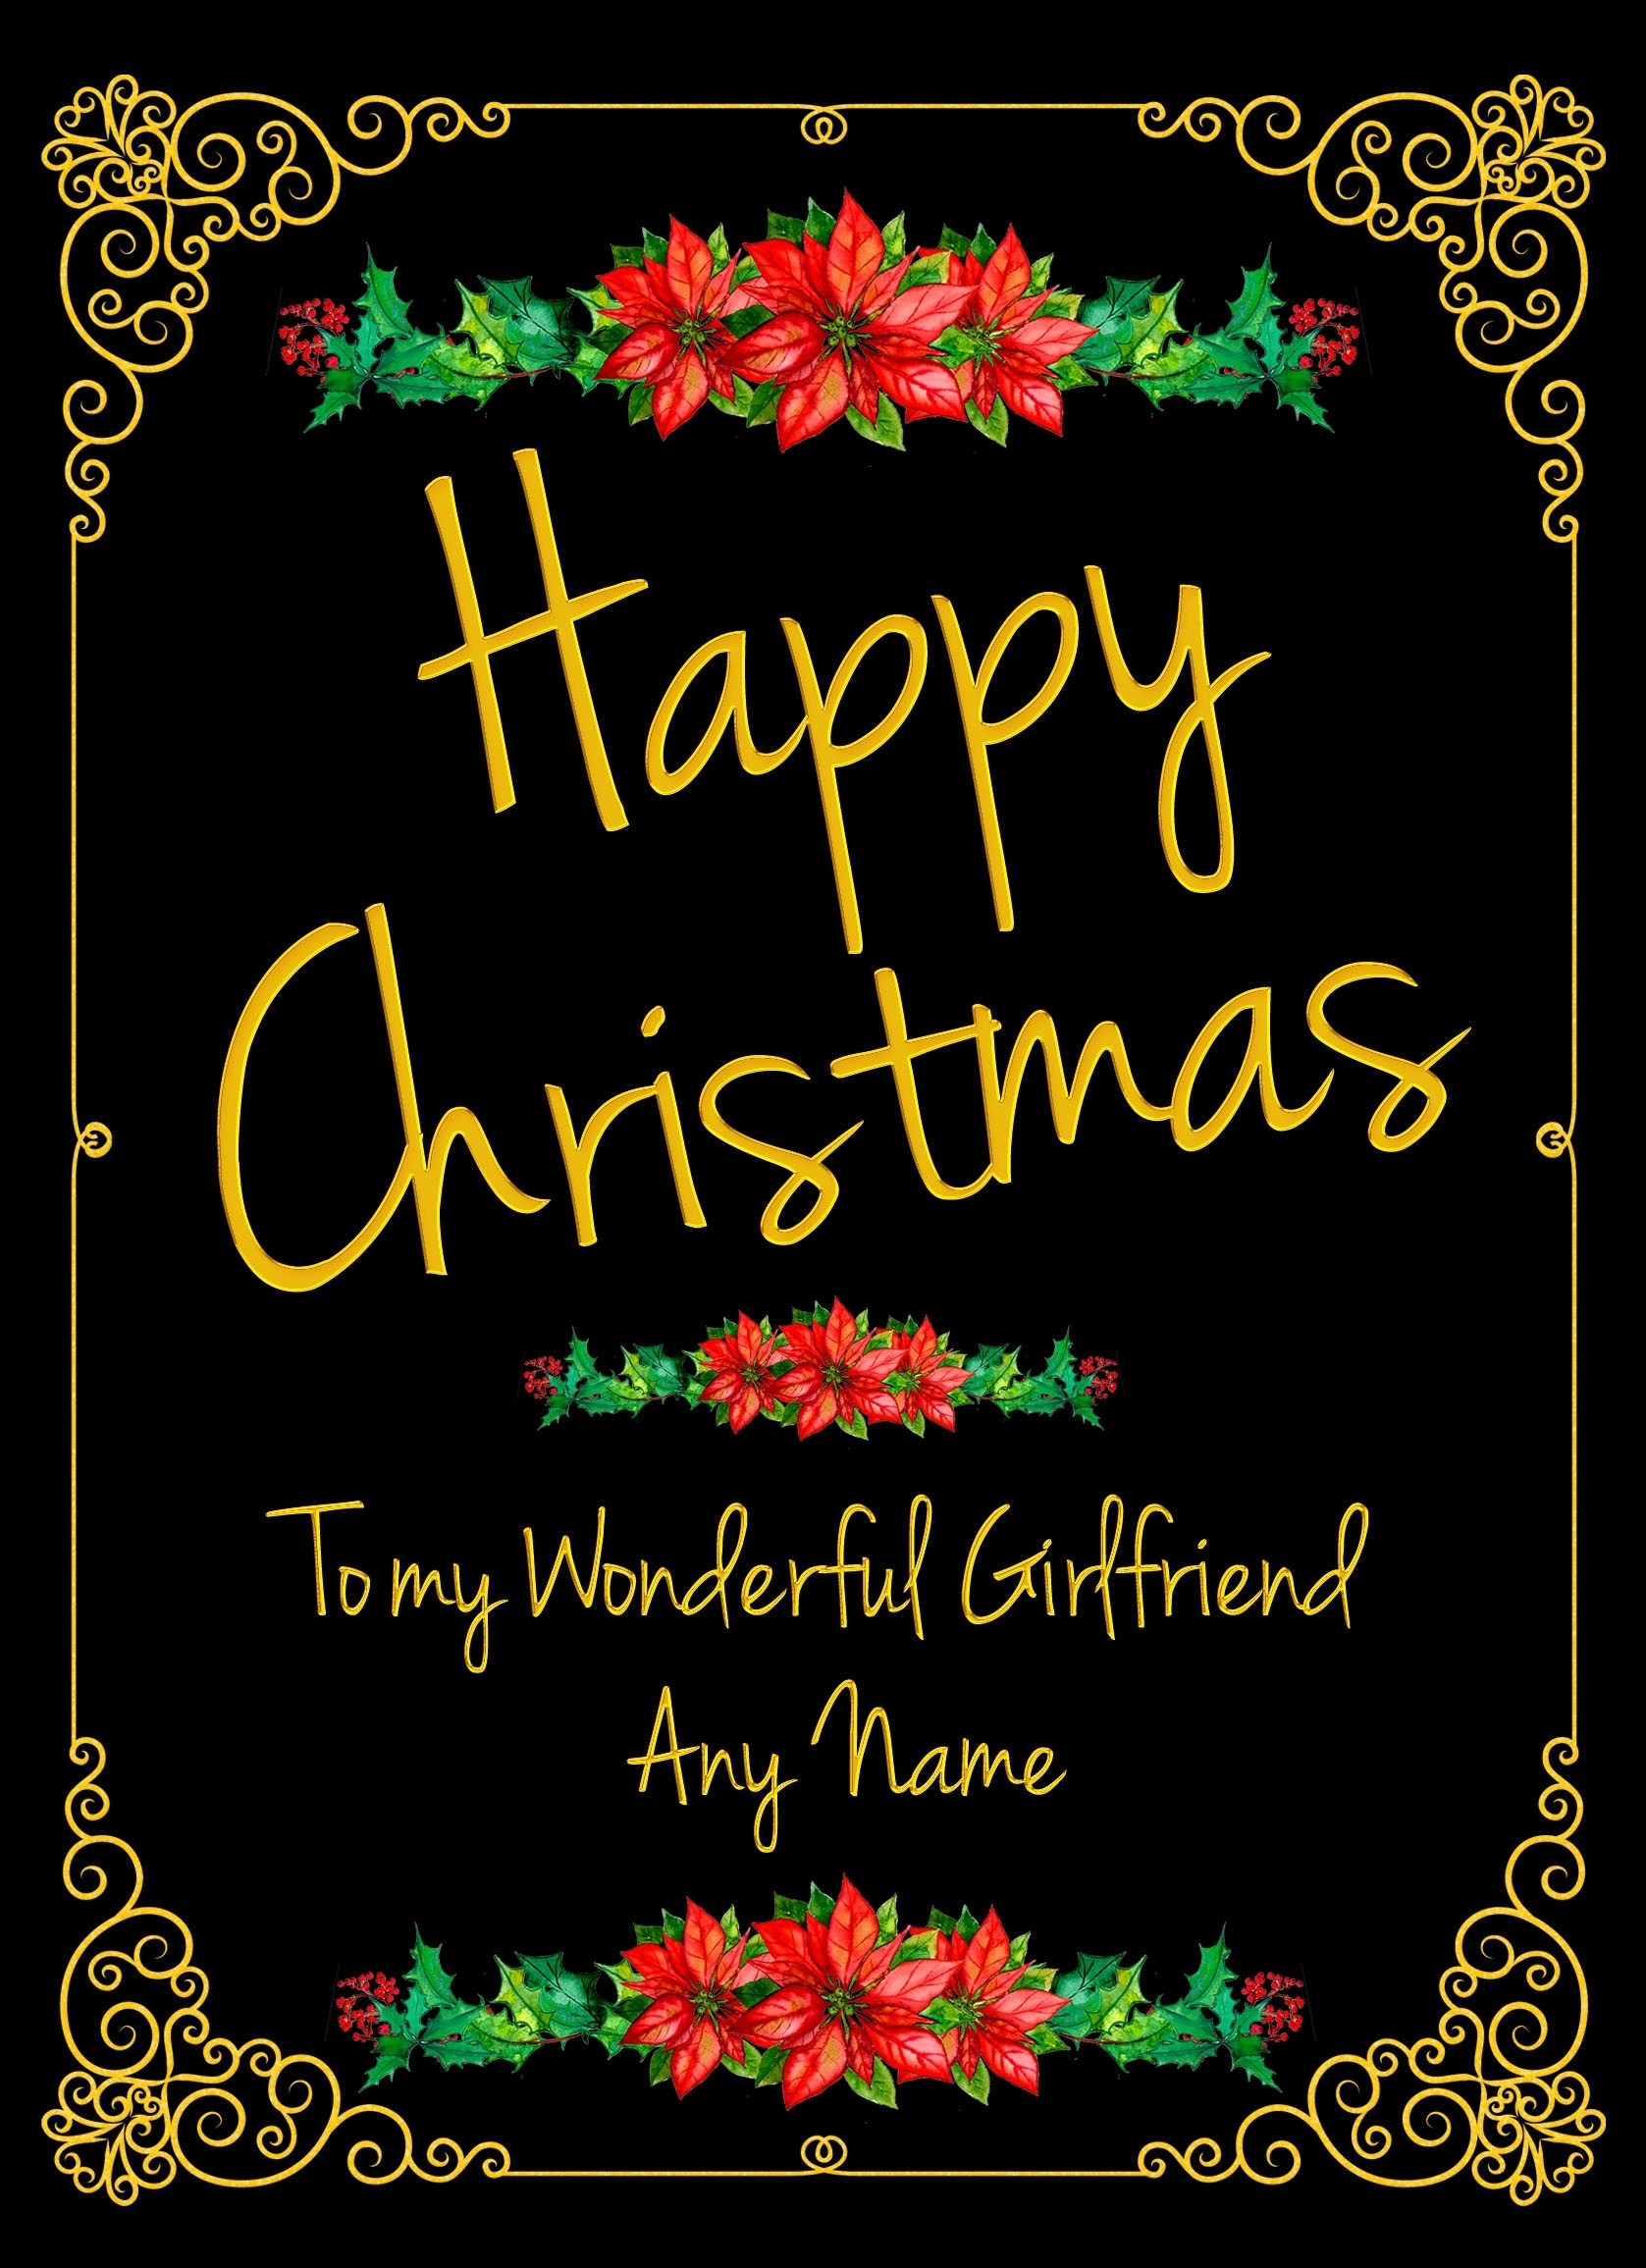 Personalised Christmas Card For Girlfriend (Wonderful)